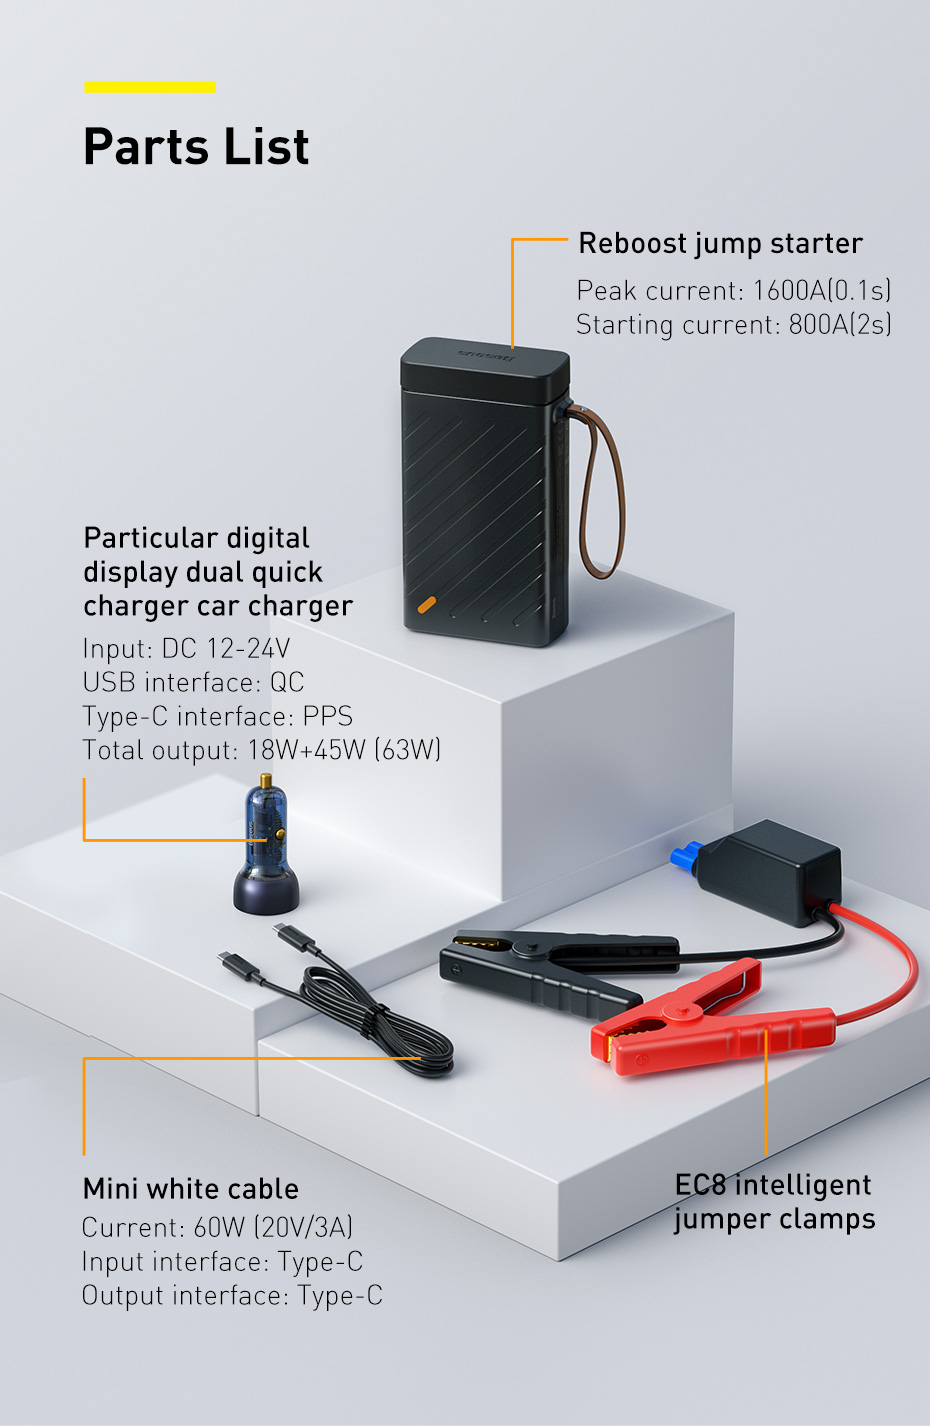 Baseus-Portable-1600A-Peak-16000mAh-Car-Battery-Charger-Jump-Starter-Booster-PD-QC30-Power-Bank-Powe-1759202-15